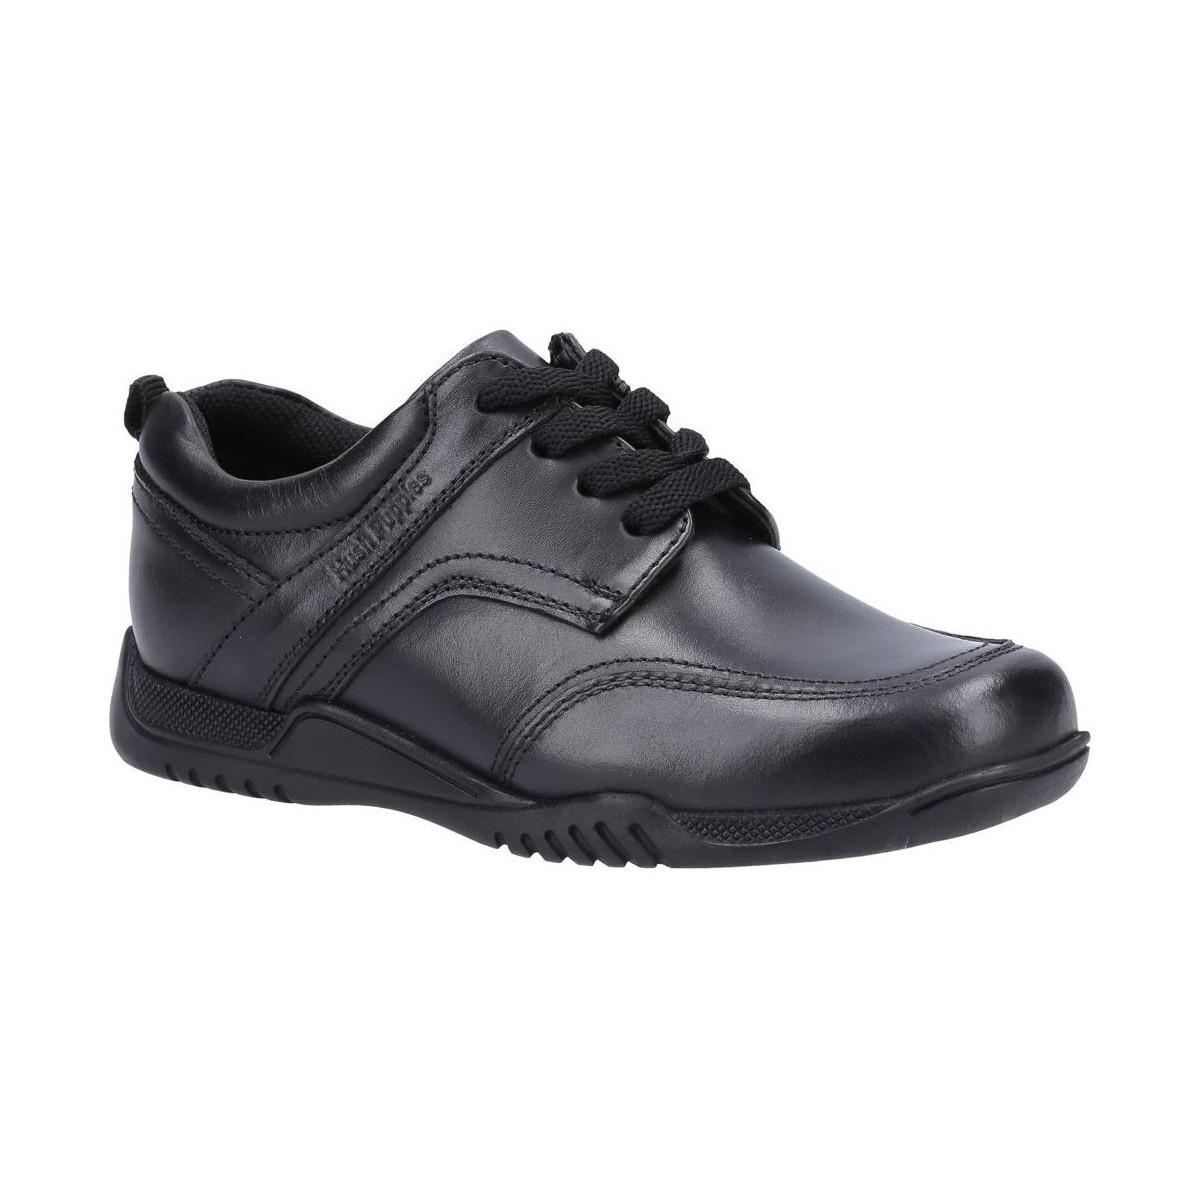 Shoes Boy Derby Shoes & Brogues Hush puppies Harvey Junior Boys School Shoes Black